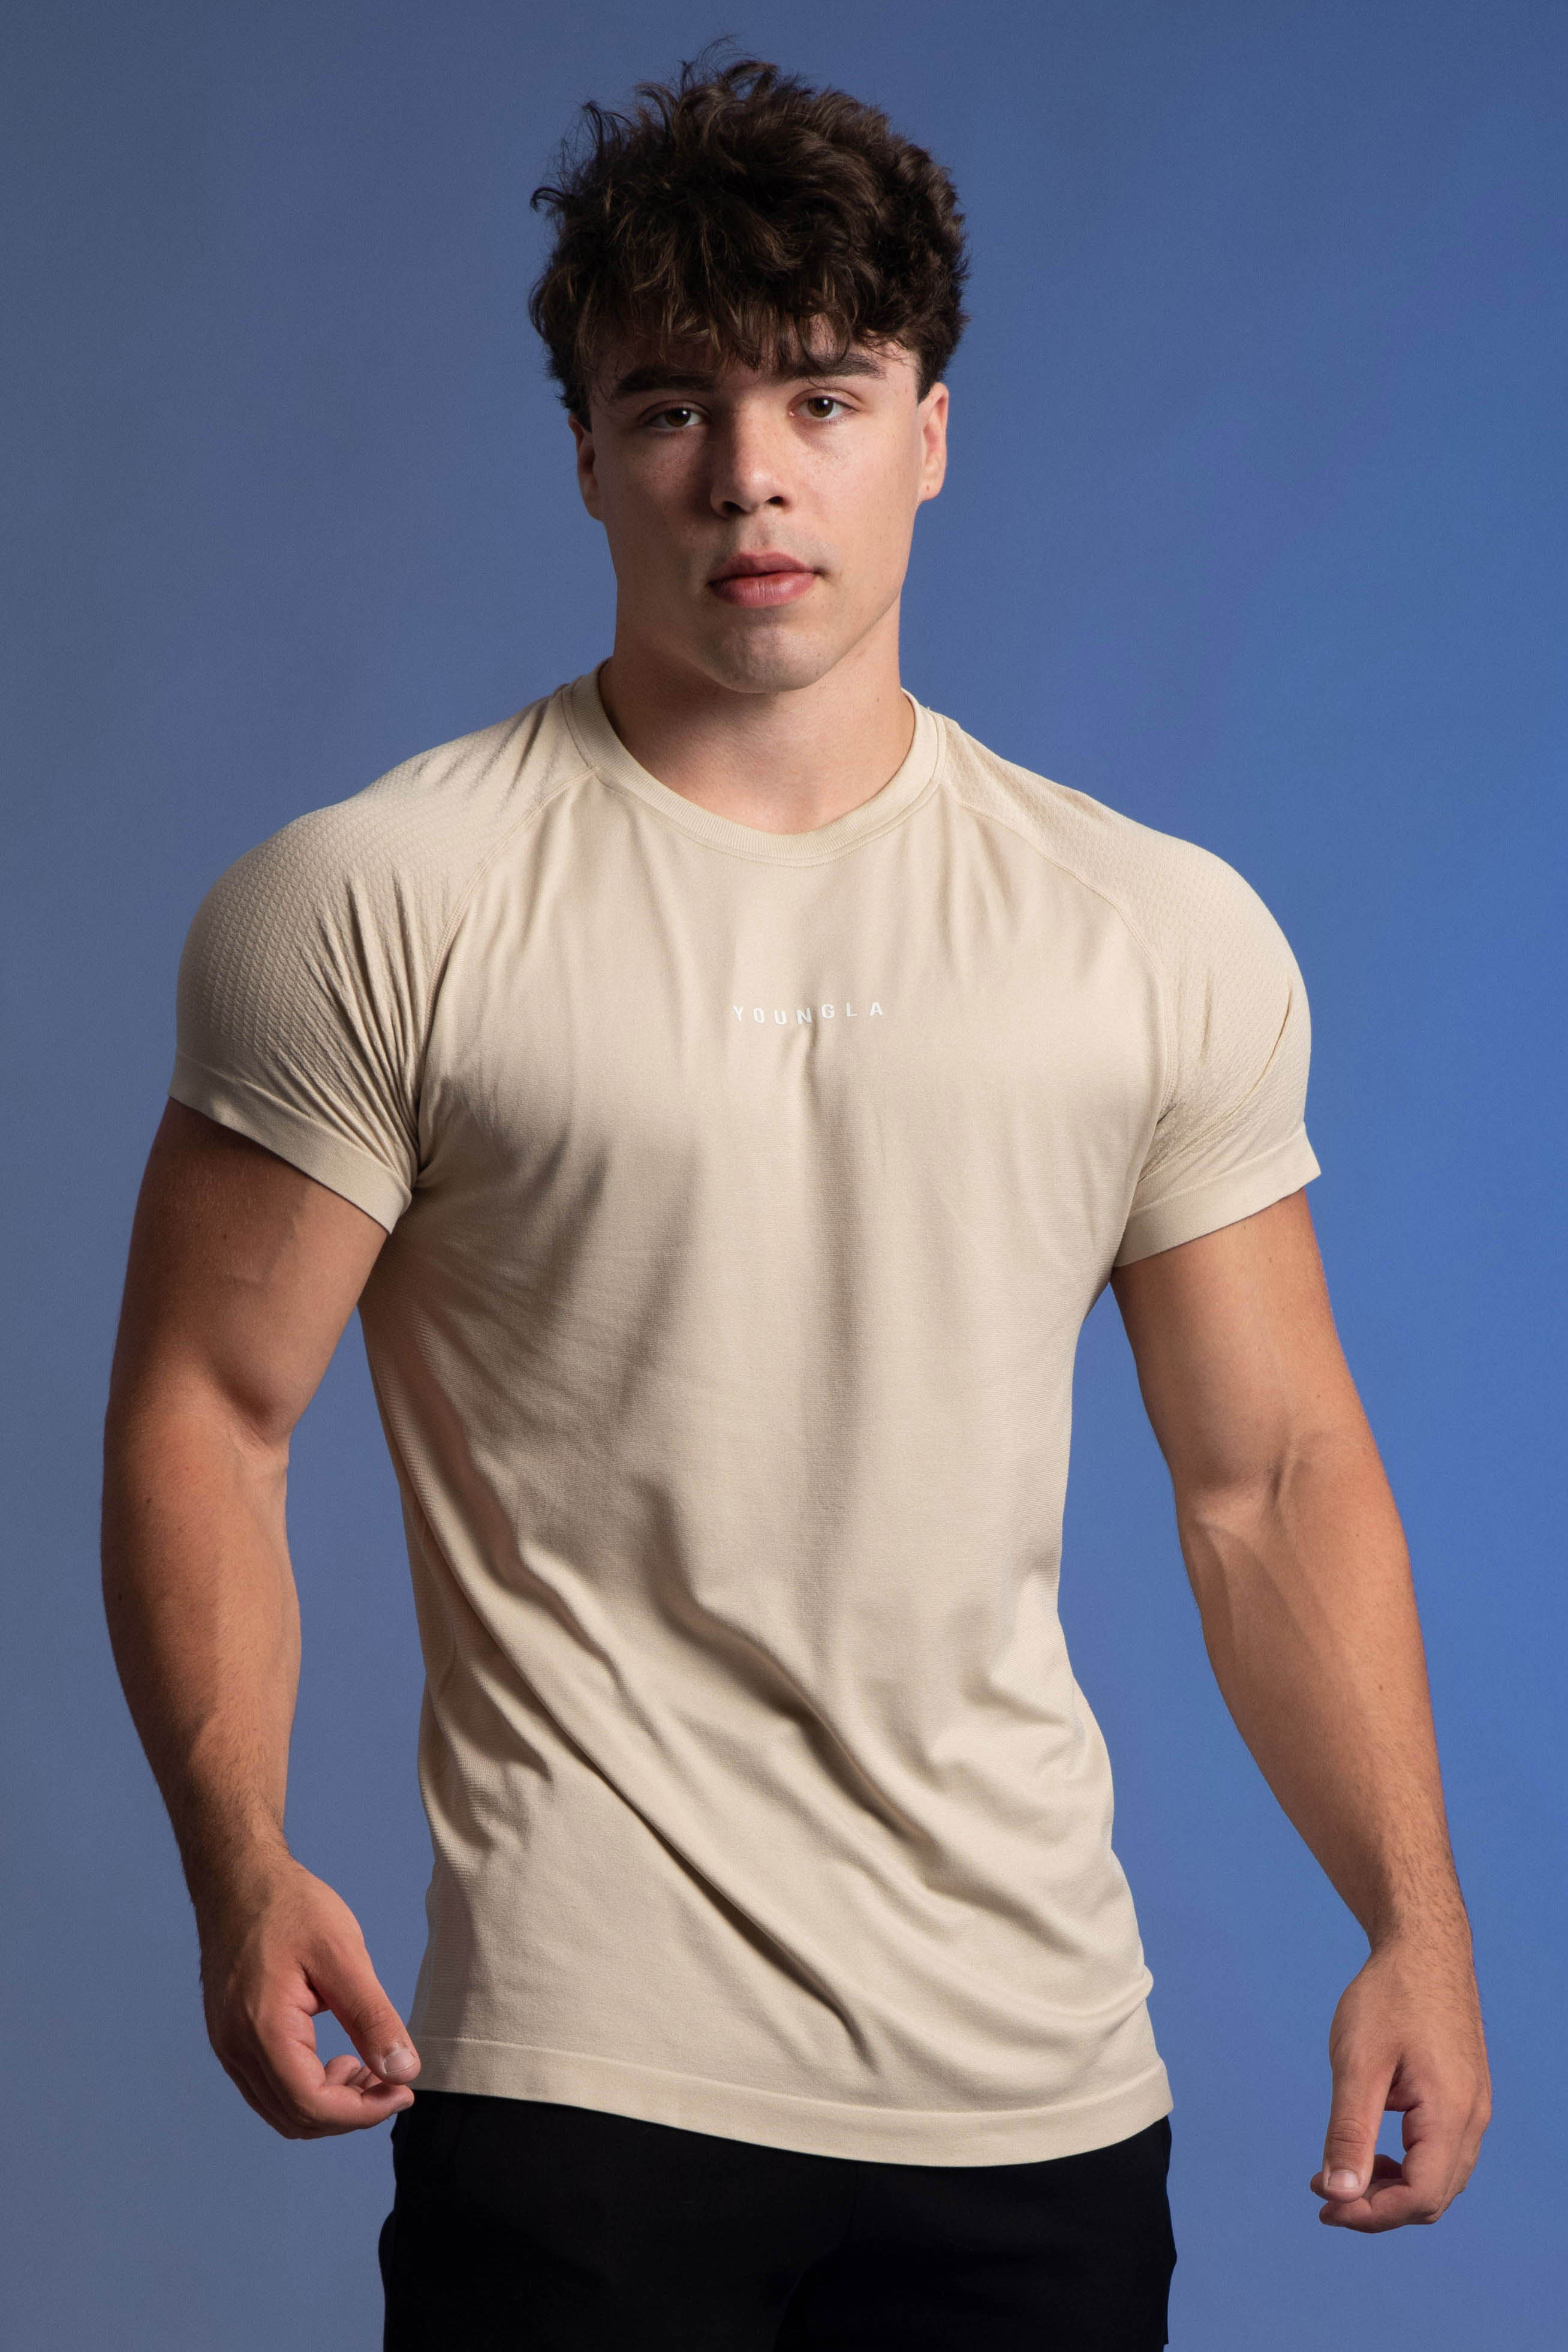 YoungLA 465 super hero compression shirt  Compression shirt, Shirts,  Clothes design